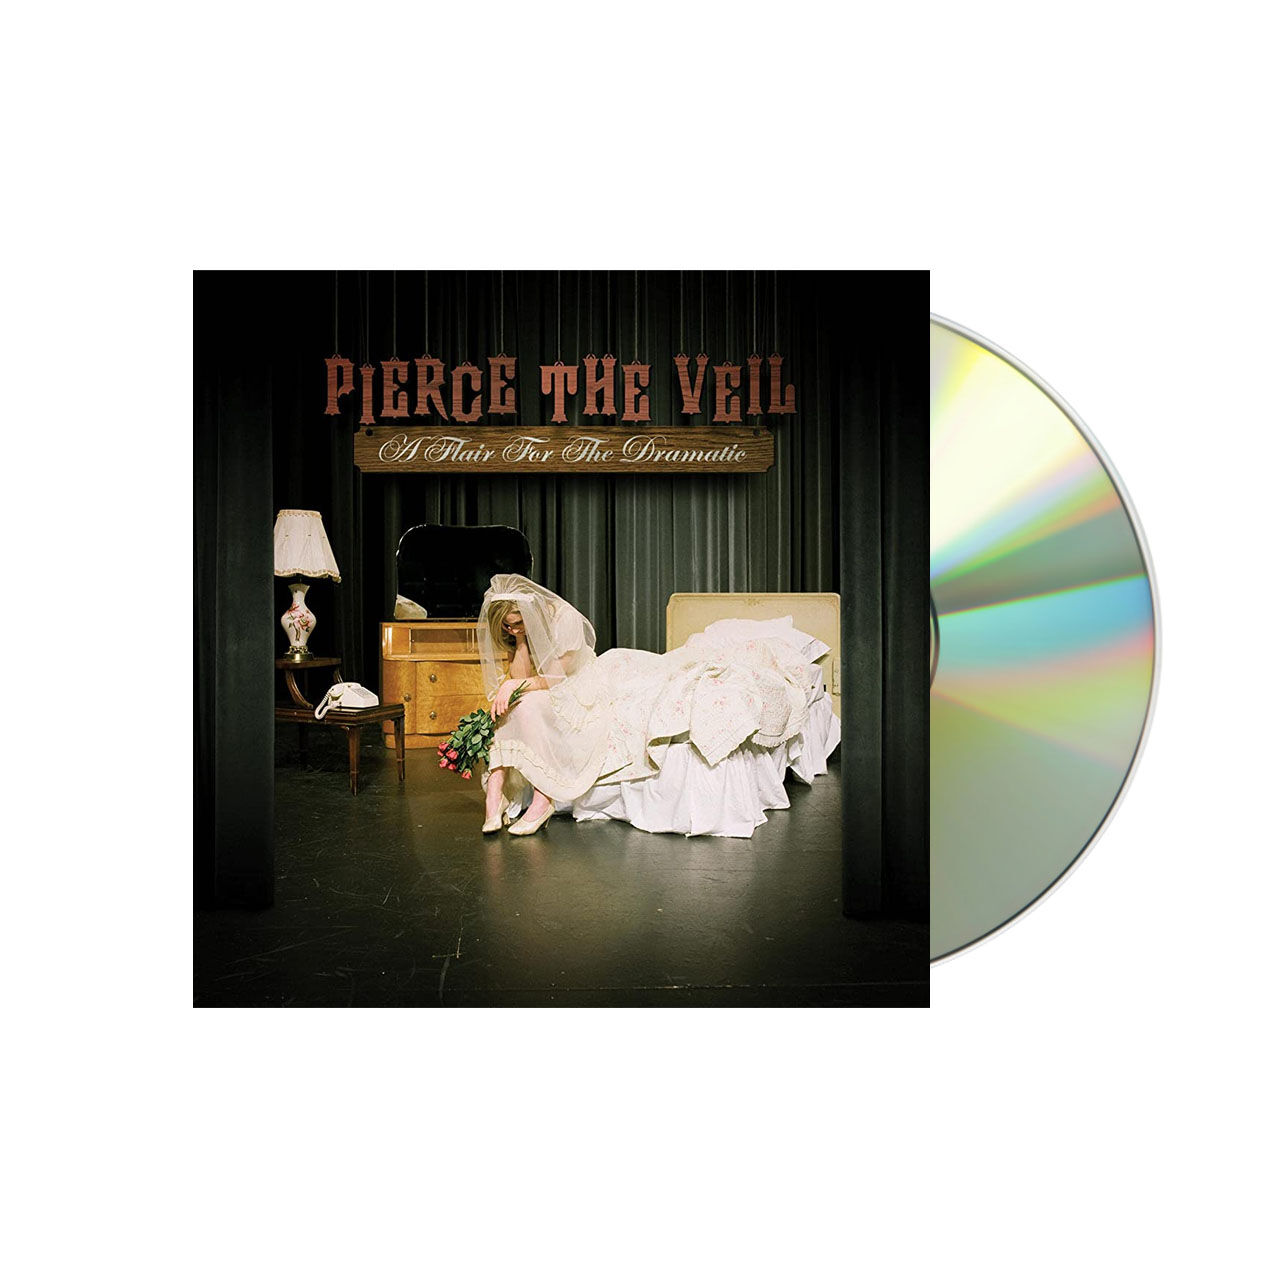 PIERCE THE VEIL A Flair For the Dramatic Jewel Case CD